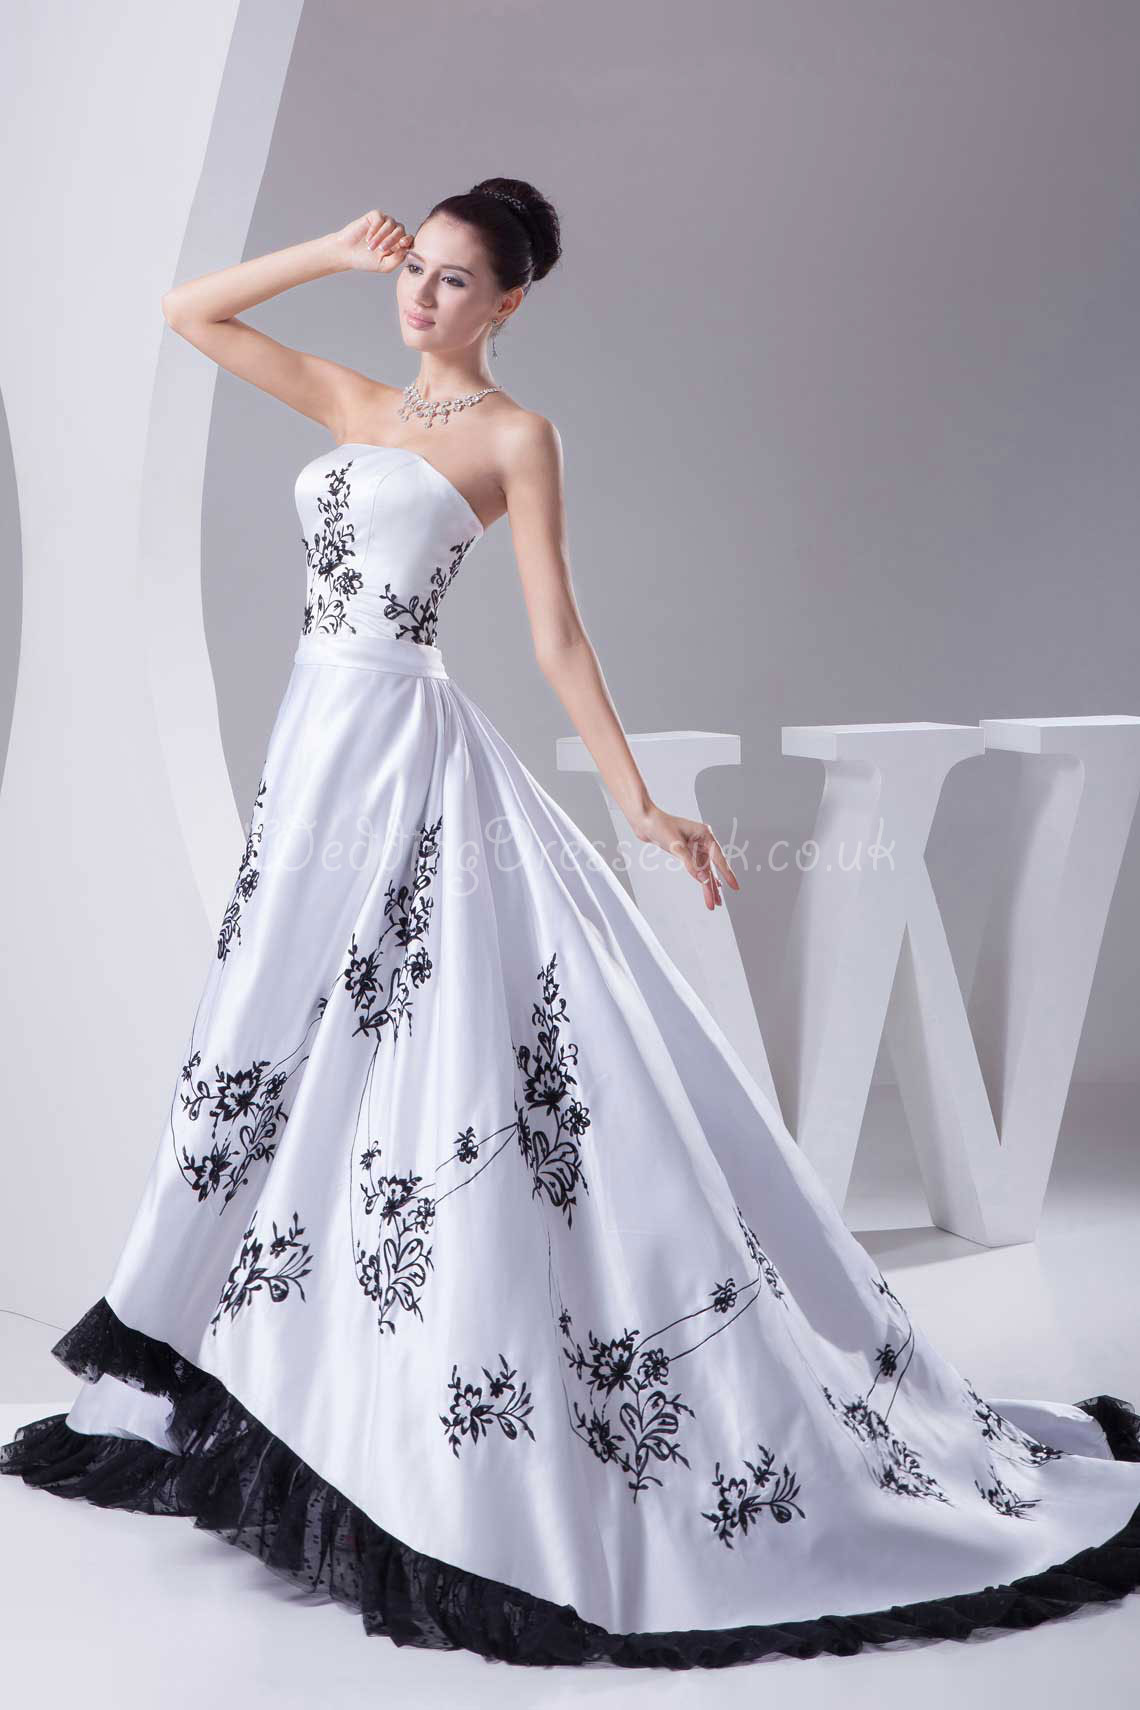 30 Ideas of Beautiful Black and White Wedding Dresses